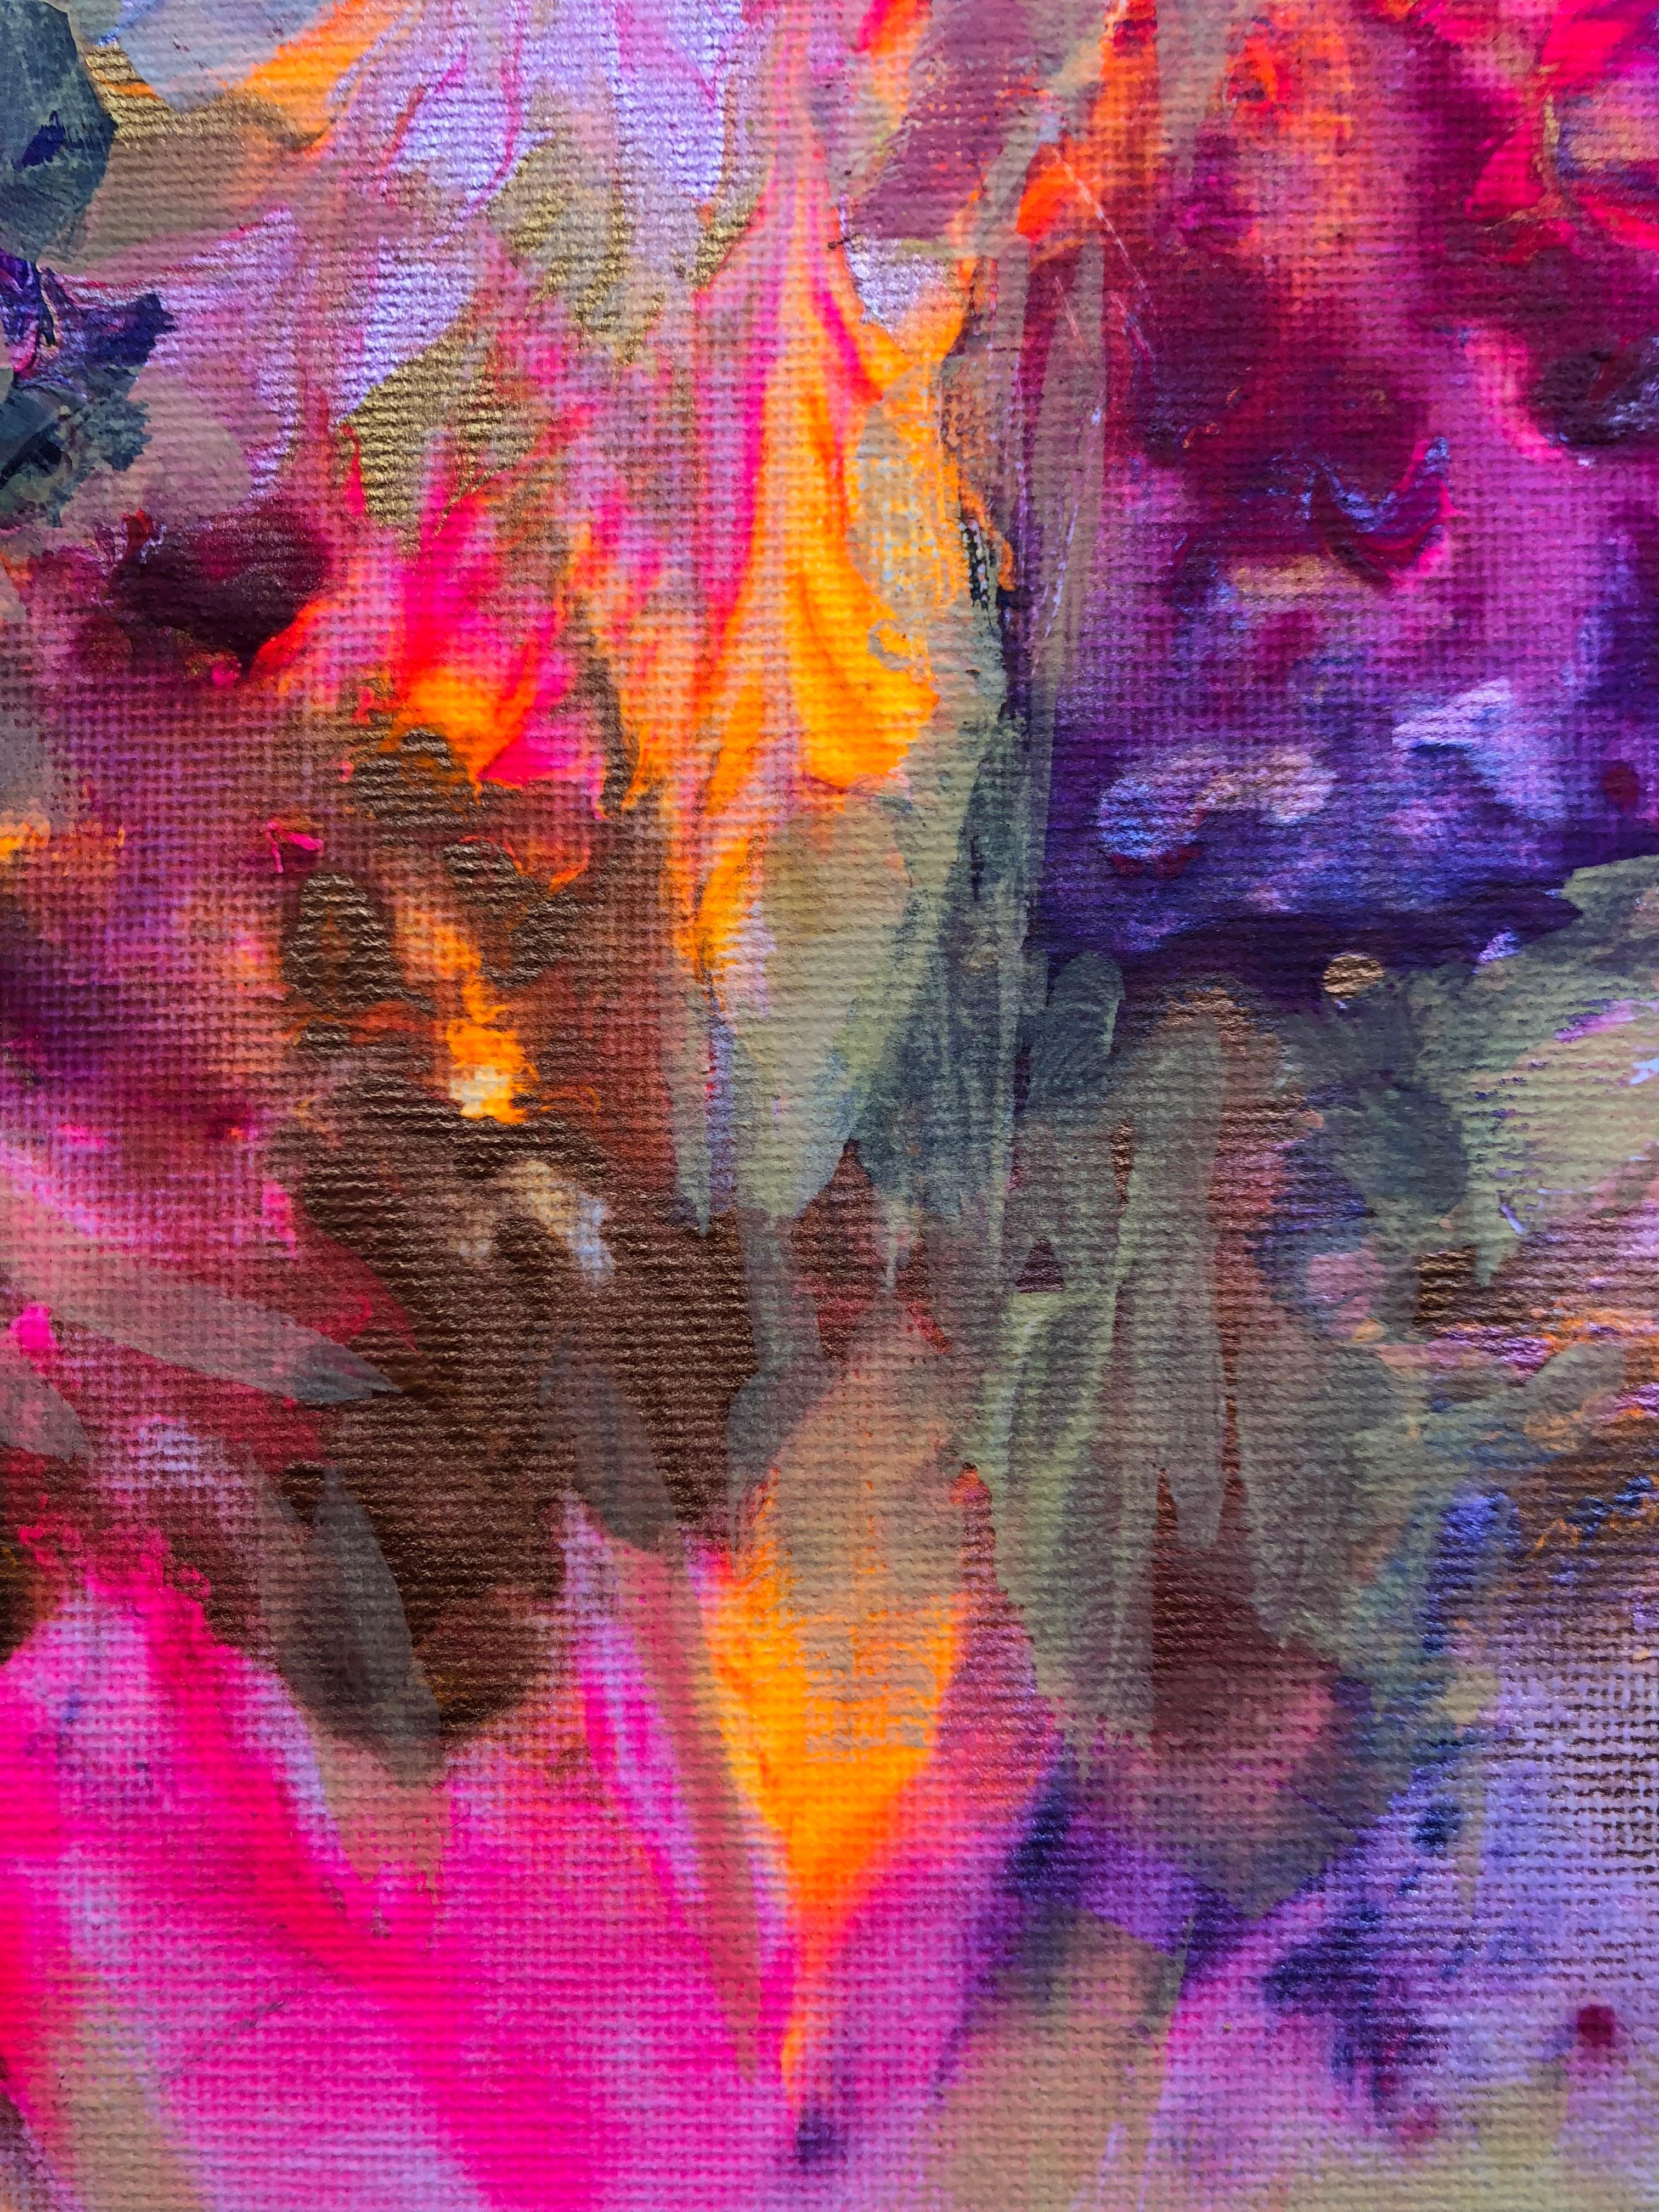 Contemporary art 21st century - painting on canvas - purple, orange, blue For Sale 1